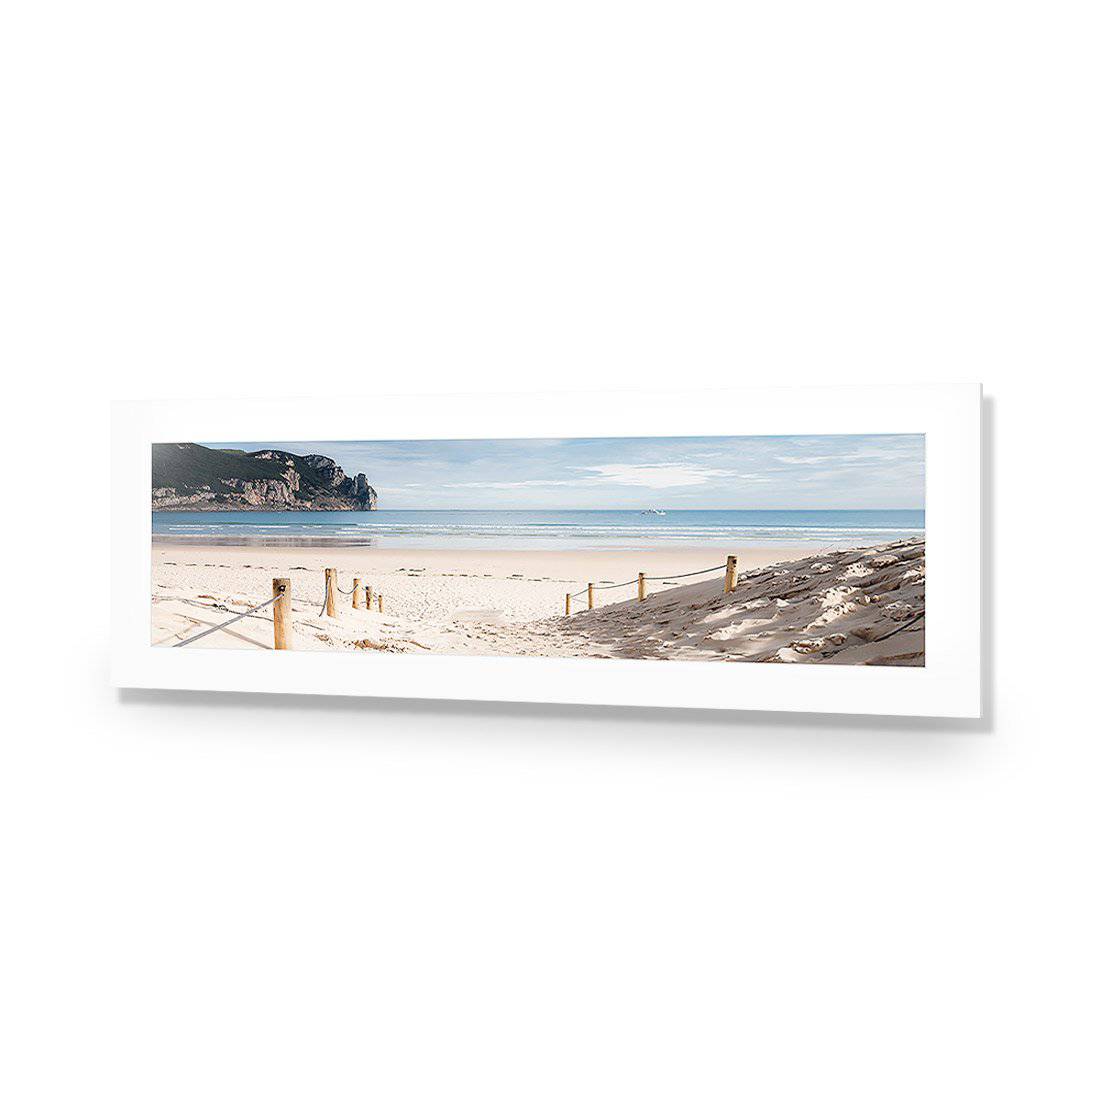 Tranquil Beach, Long-Acrylic-Wall Art Design-With Border-Acrylic - No Frame-60x20cm-Wall Art Designs